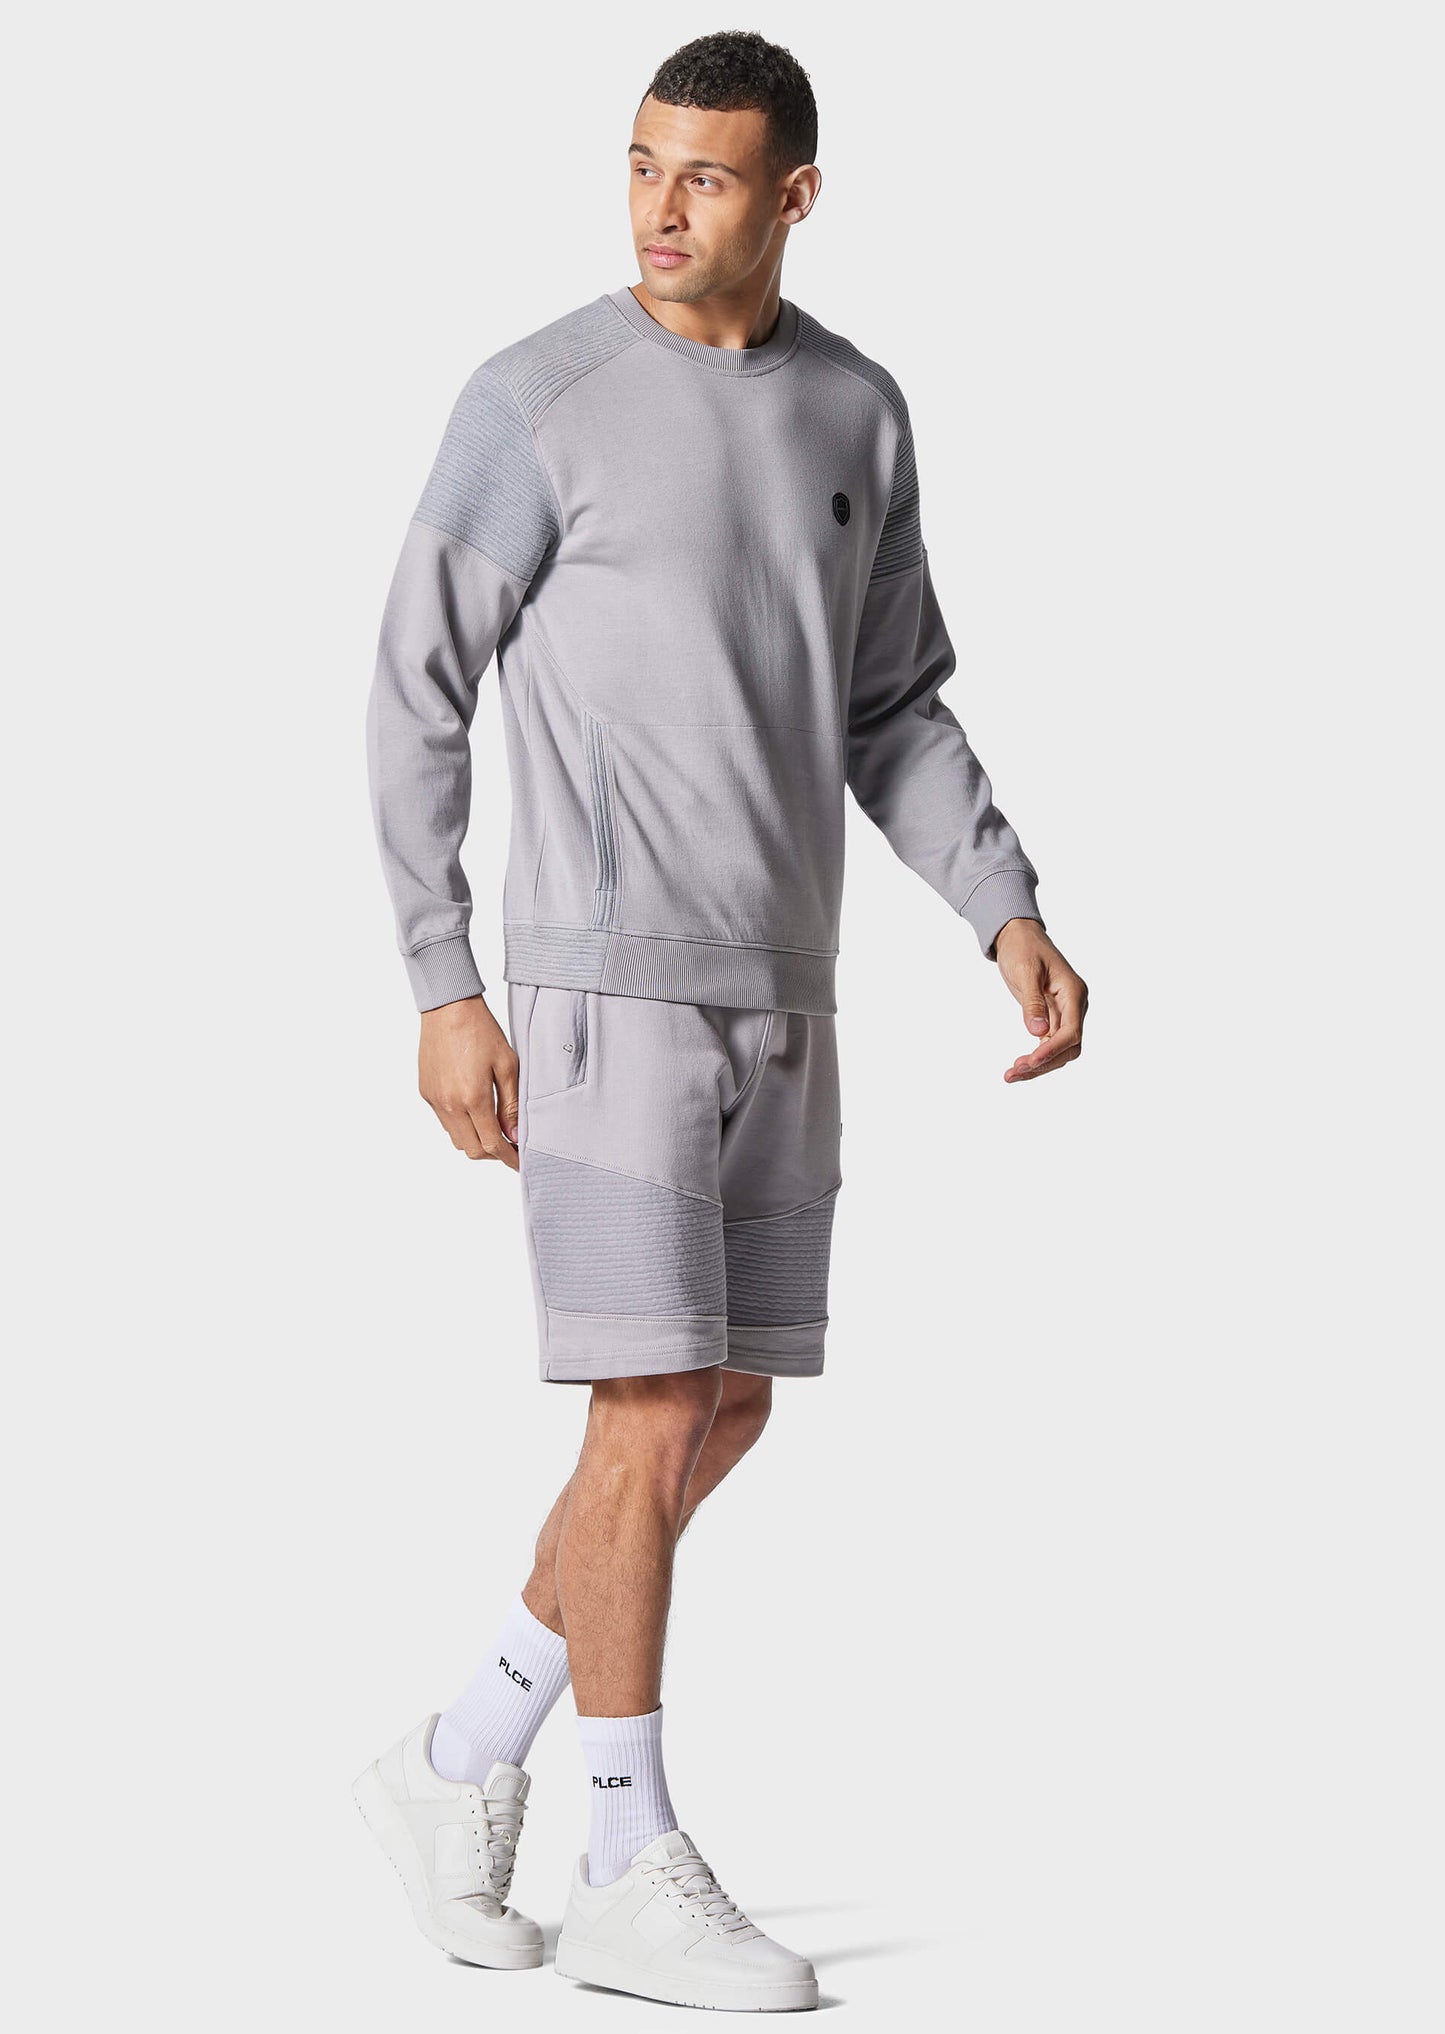 Atretta Stone Grey Sweatshirt